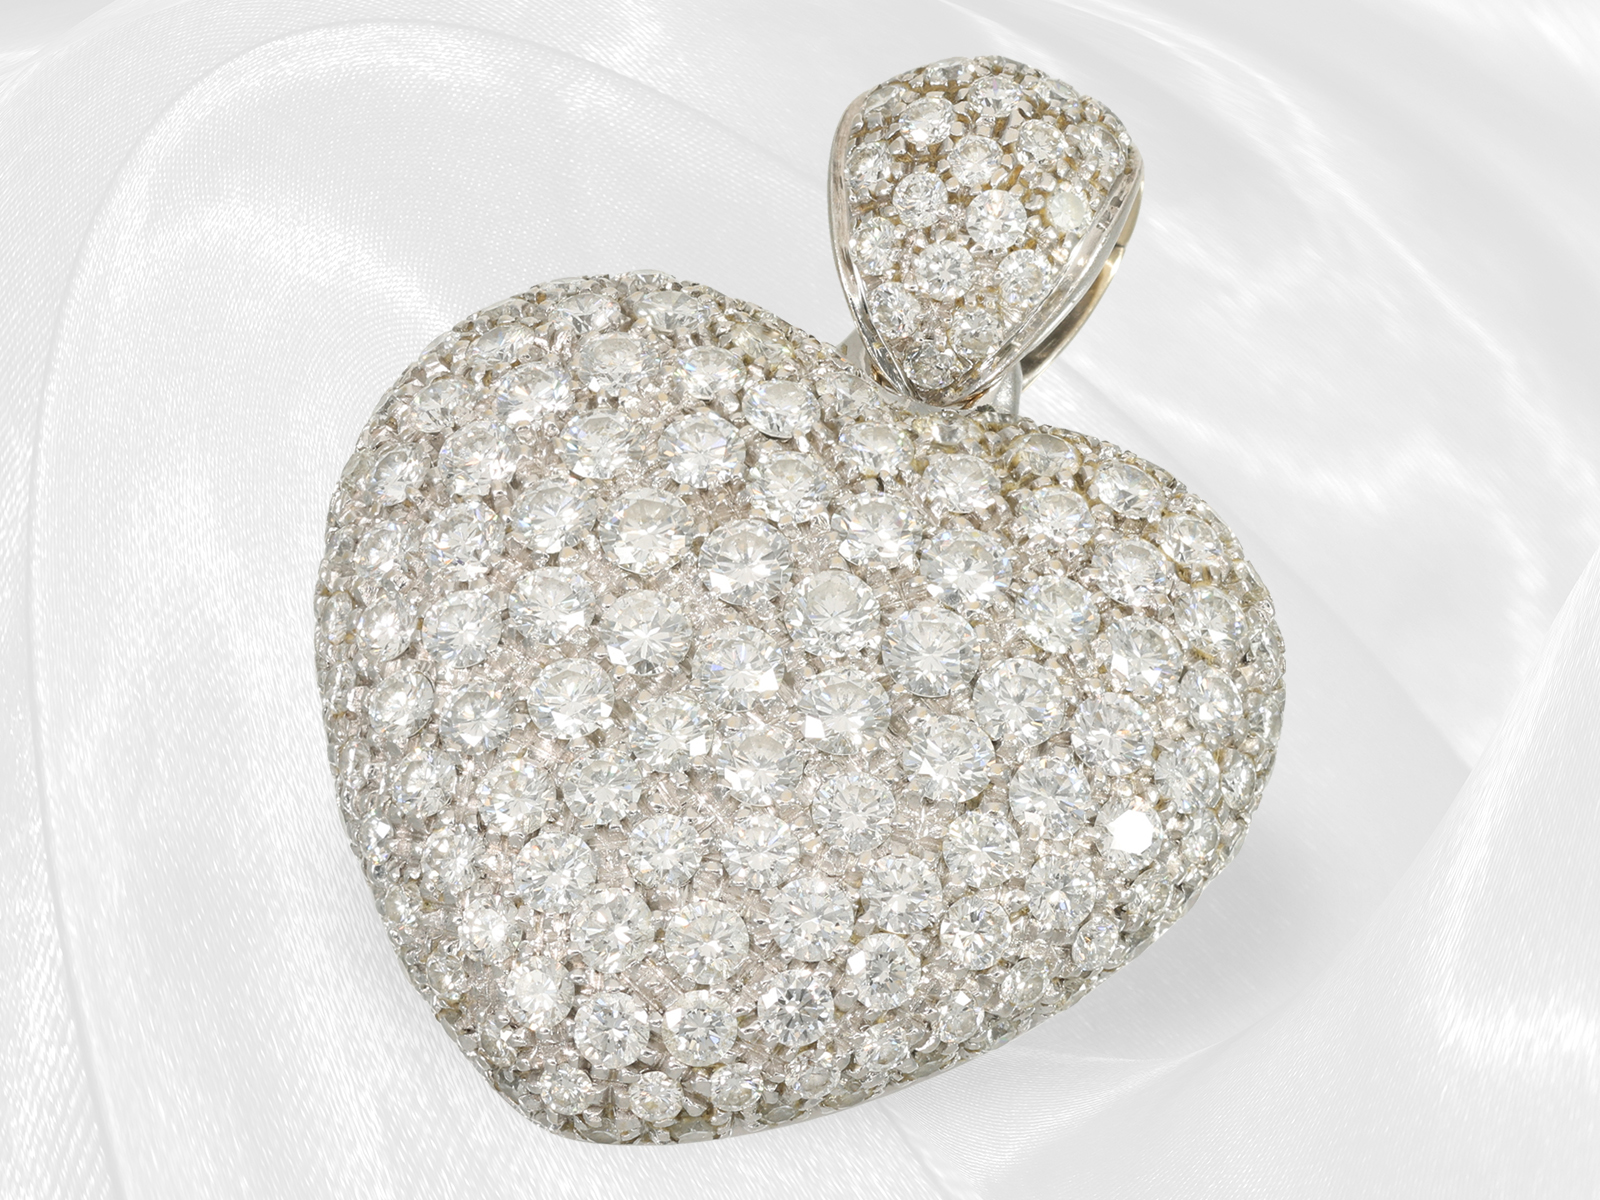 Italian richly set brilliant-cut diamond heart pendant, approx. 4ct brilliant-cut diamonds